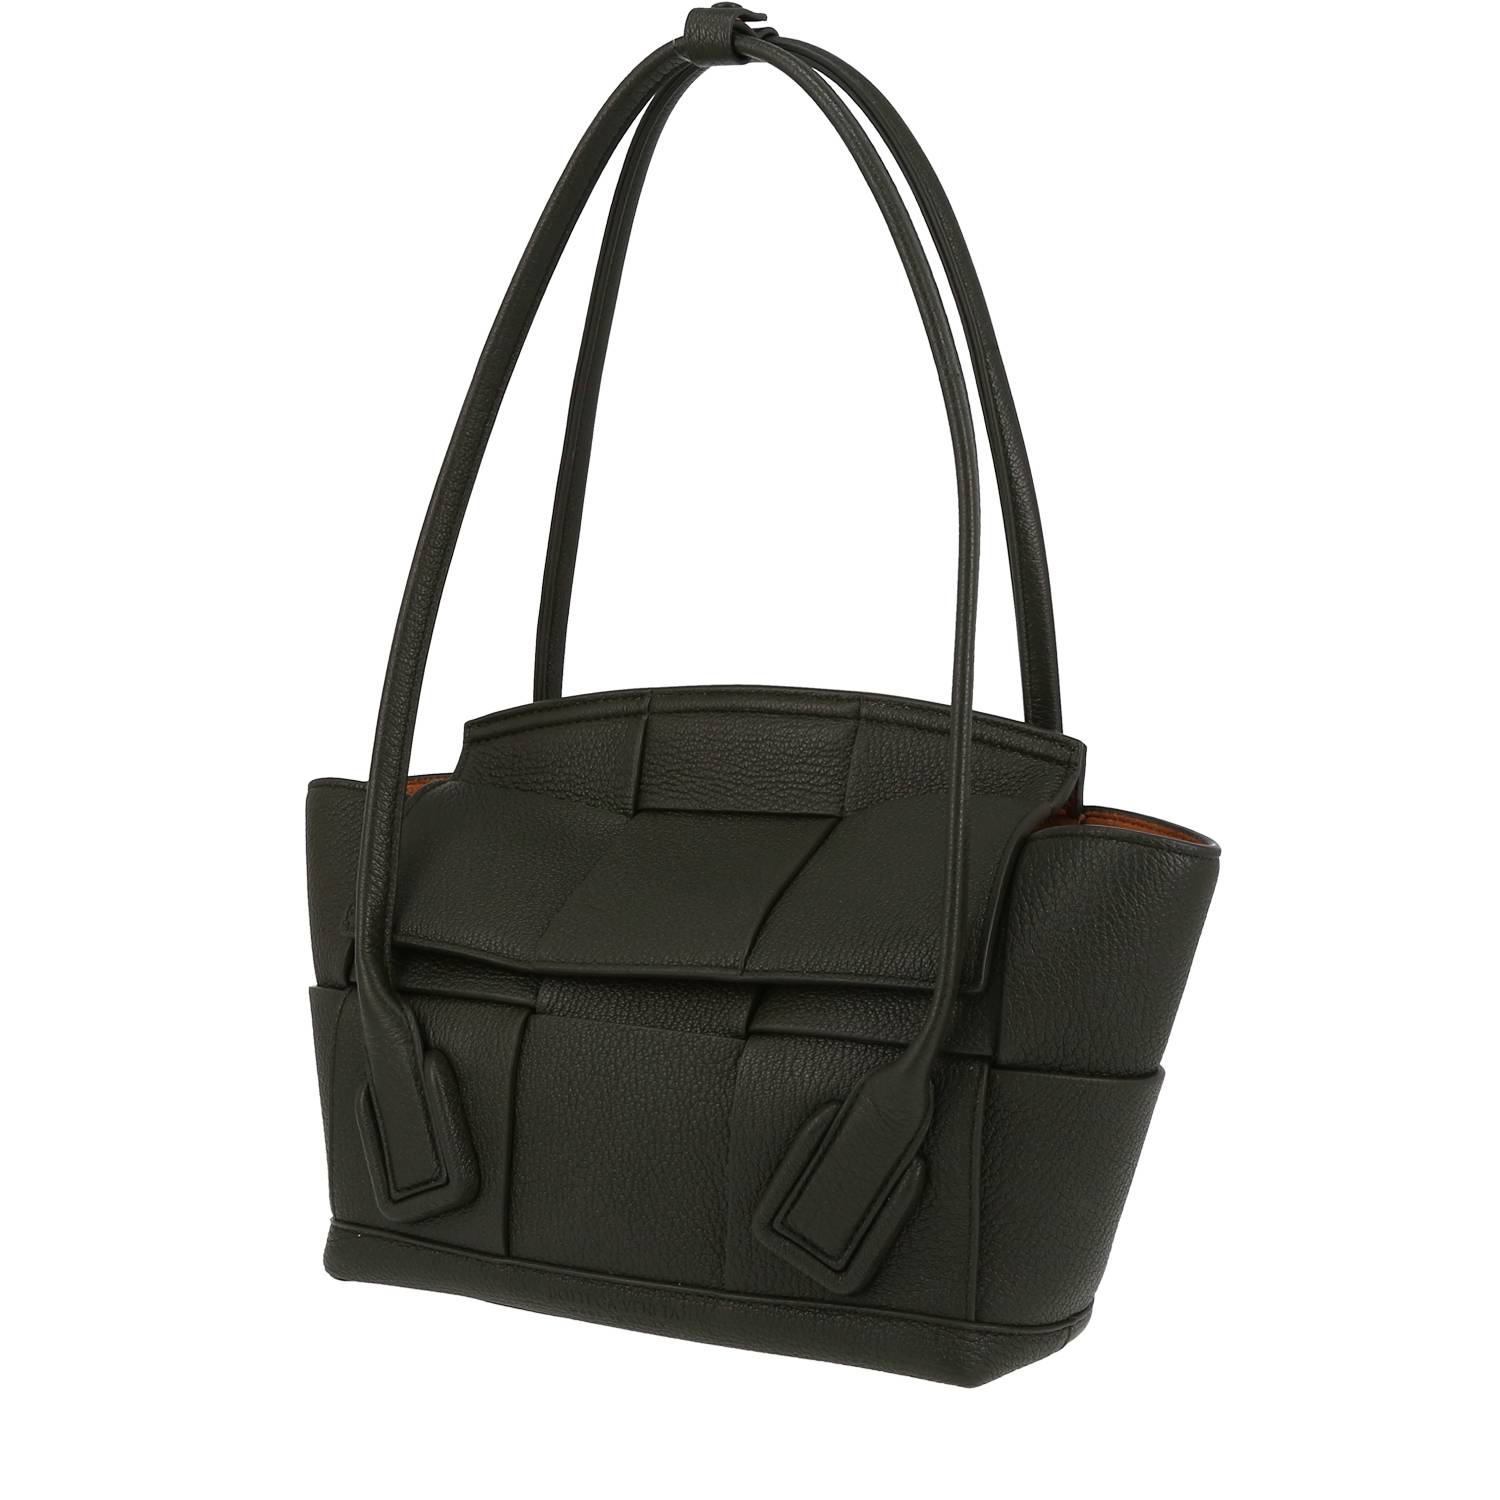 https://medias.collectorsquare.com/images/products/401021/00pp-bottega-veneta-arco-handbag-in-green-intrecciato-leather.jpg